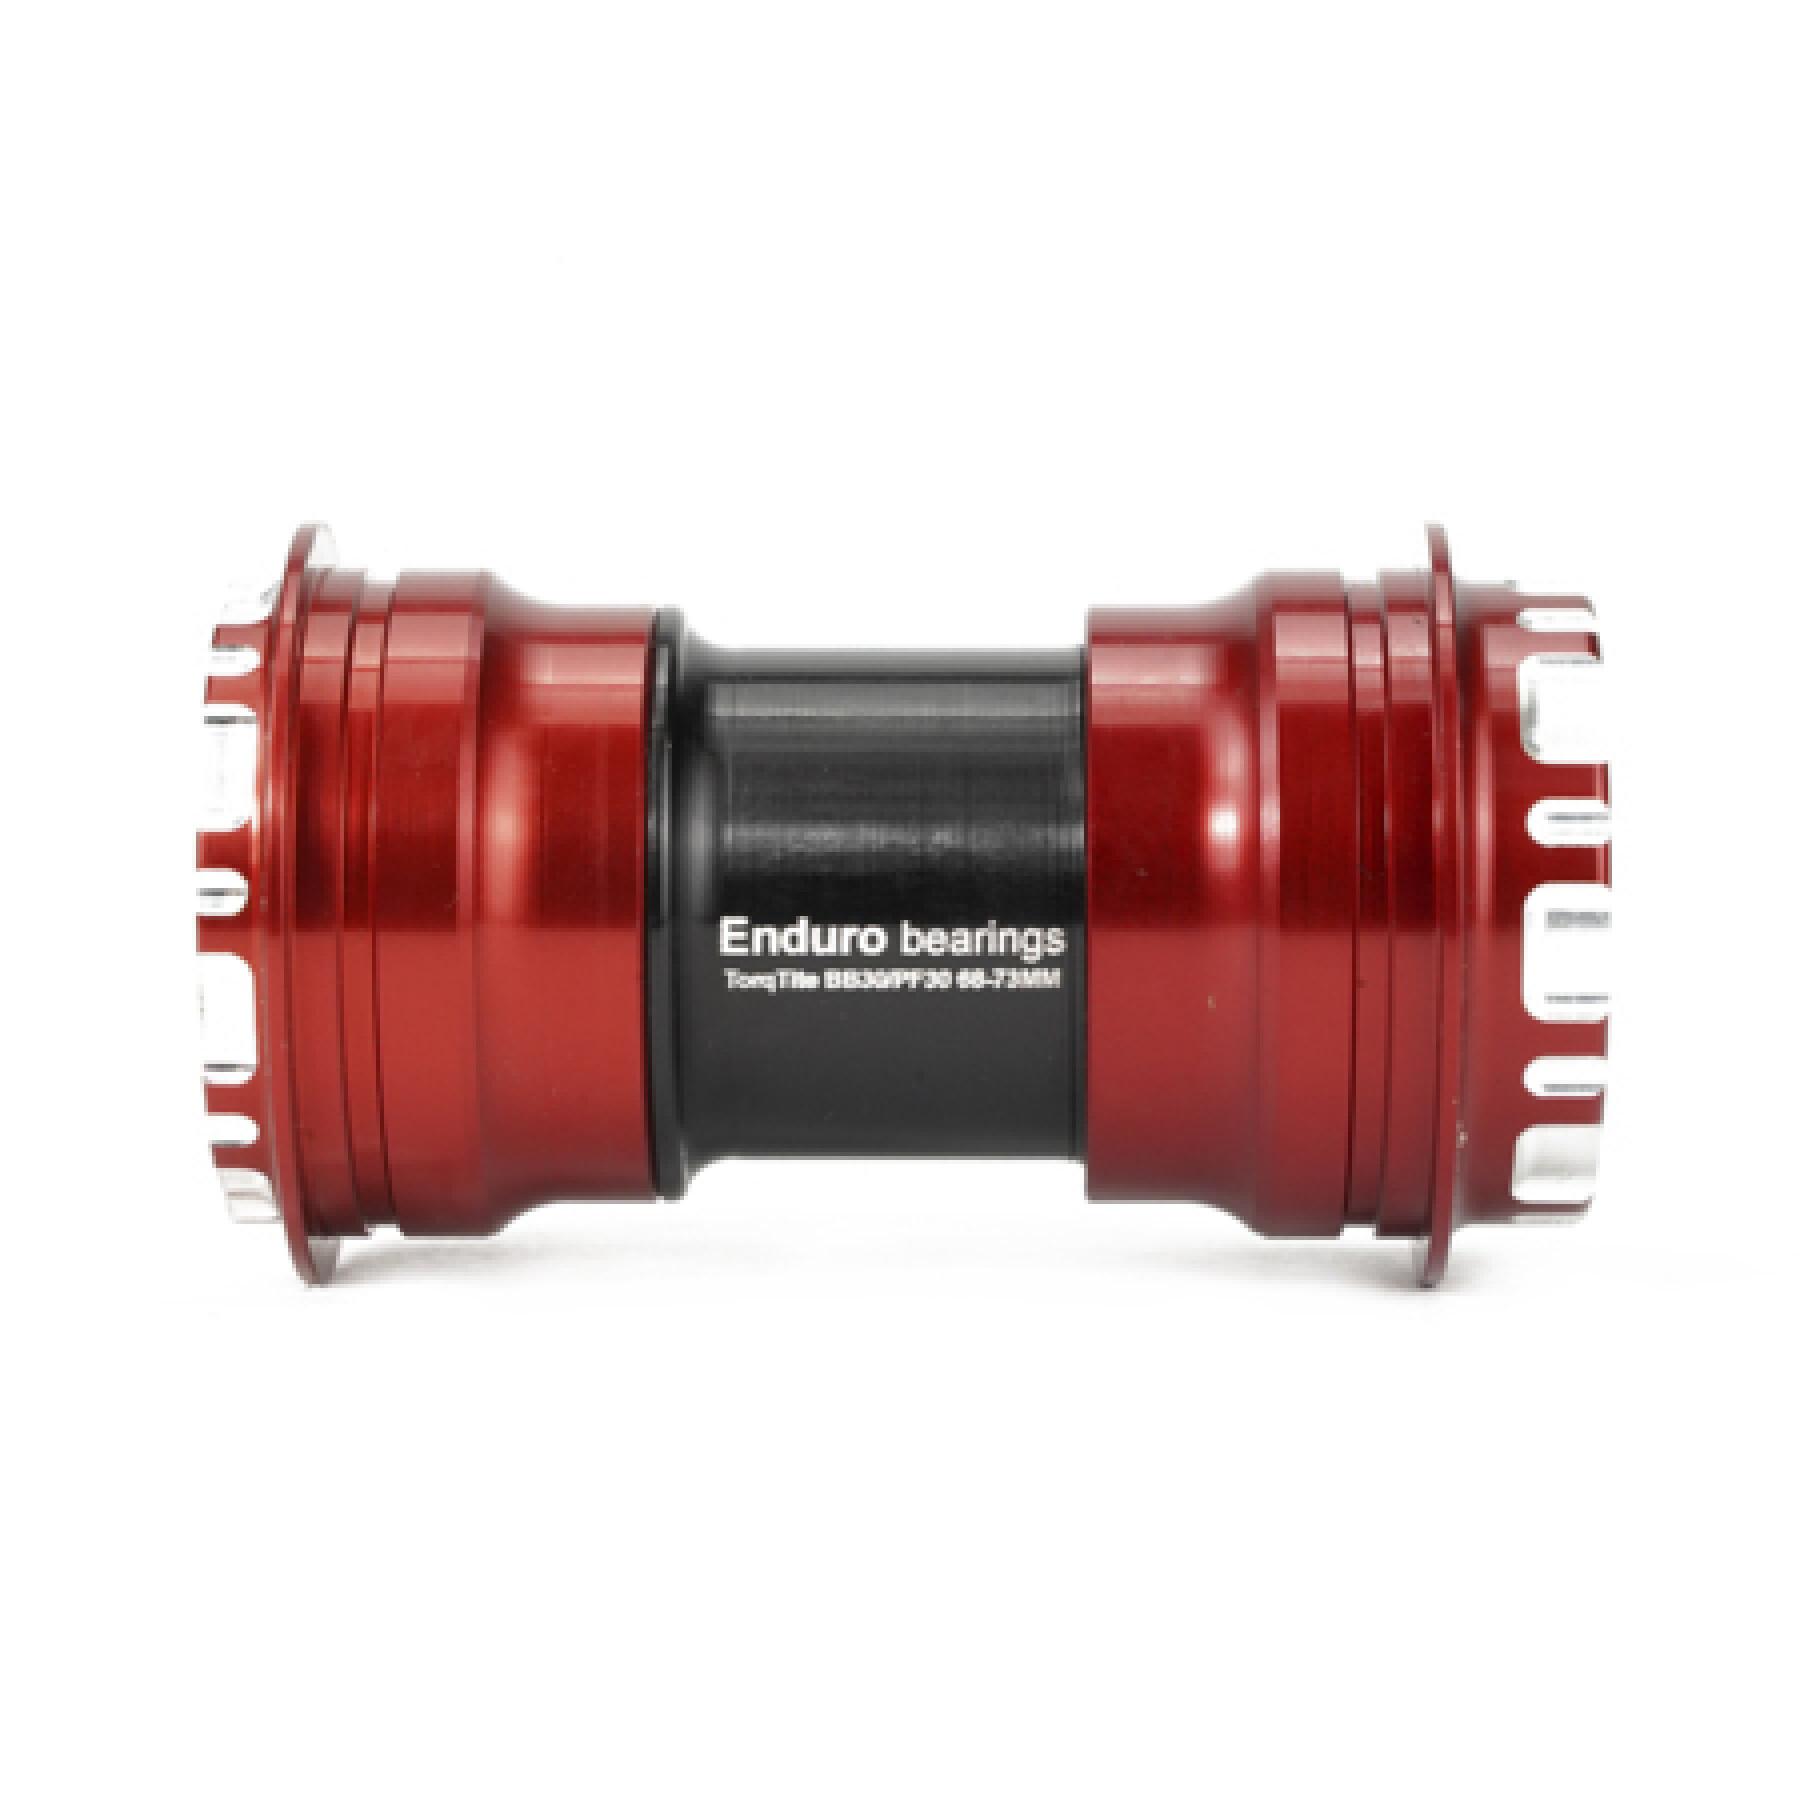 Wspornik dolny Enduro Bearings TorqTite BB A/C SS-PF30A-24mm / GXP-Red